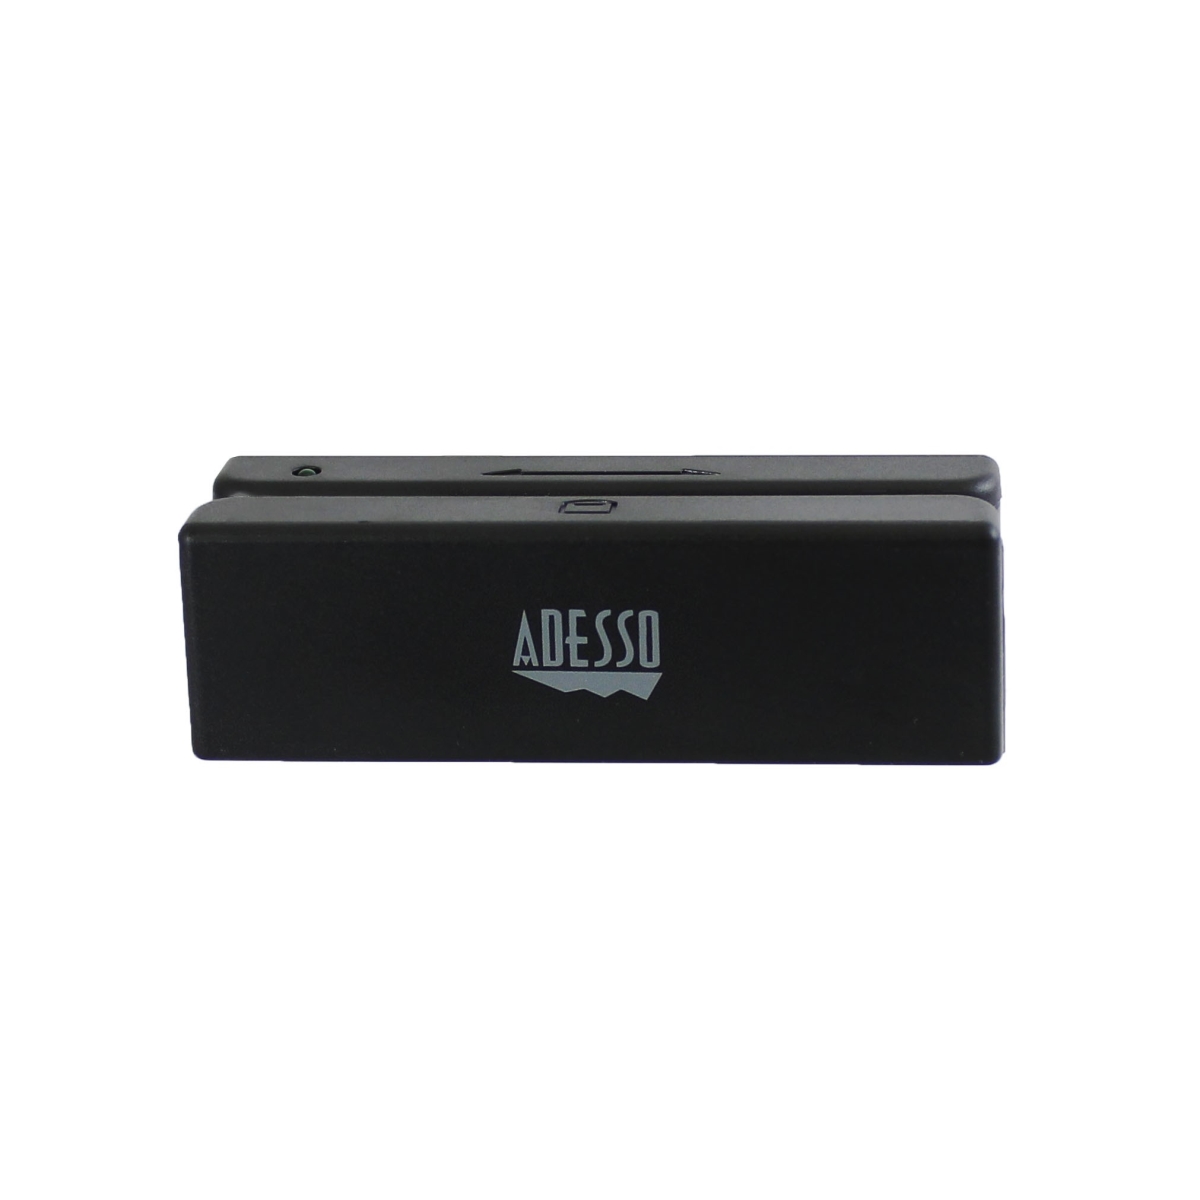 Picture of Adesso MSR-100 Magnetic Stripe USB Card Reader